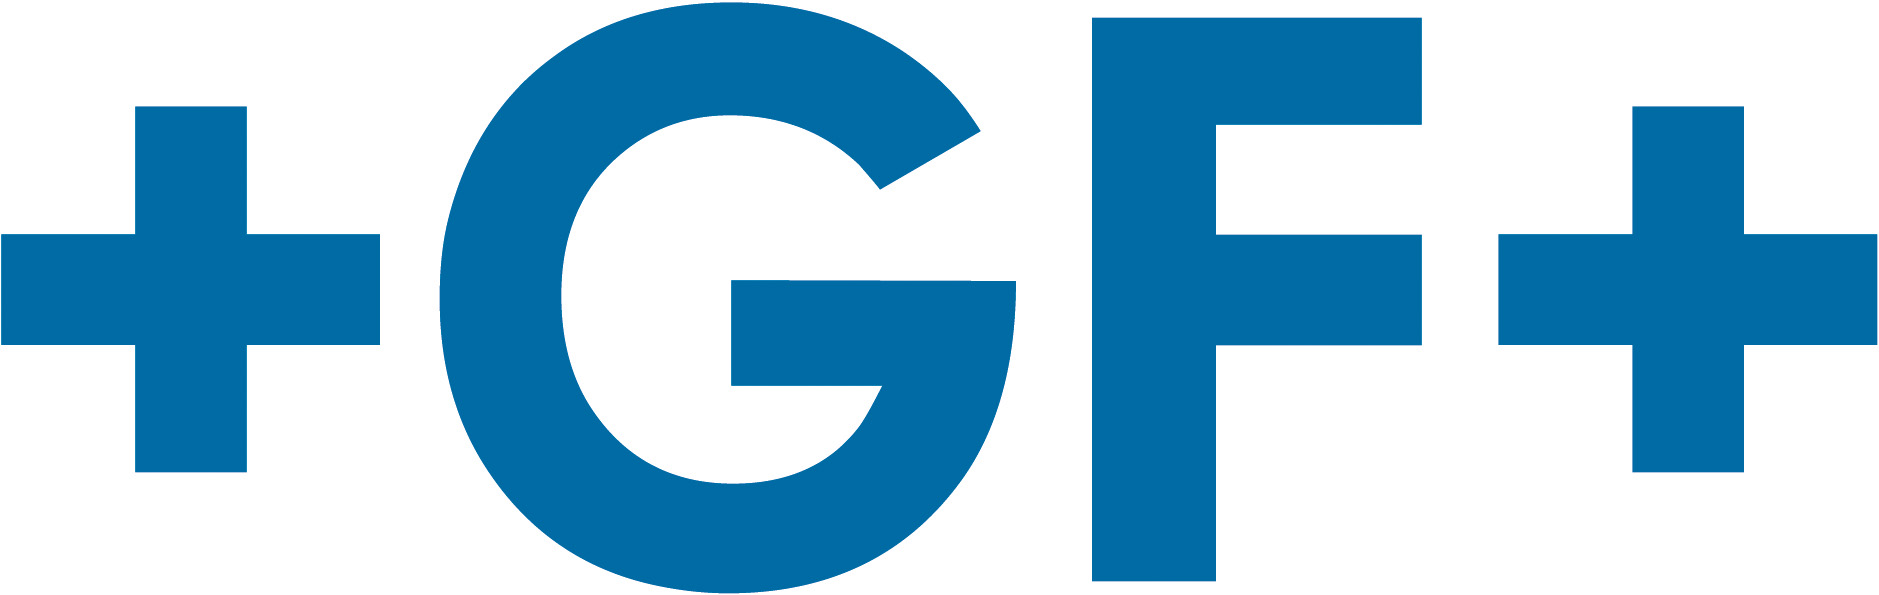 Georg Fischer GF_Logo_rgb_GF_Blue_1_300dpi